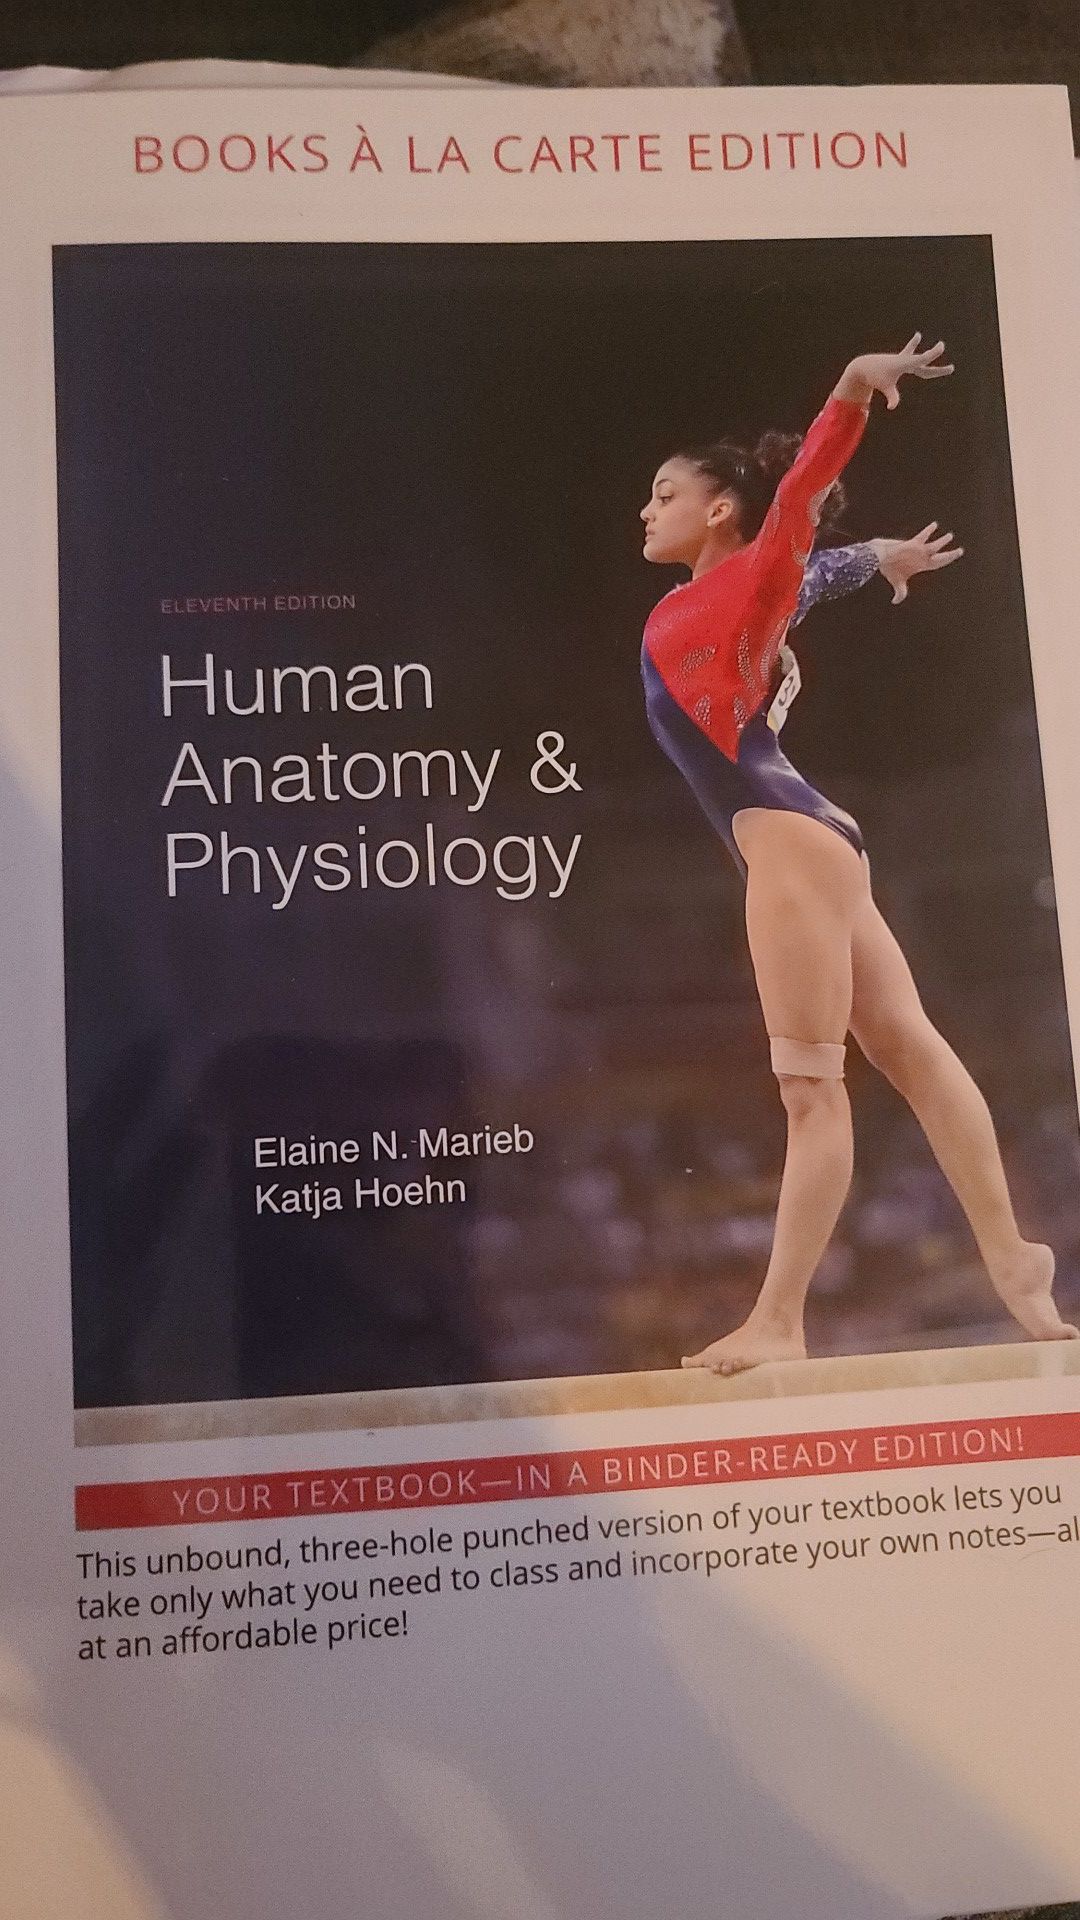 Human Anatomy and Physiology by Elaine N Marieb and Katja Hoehn